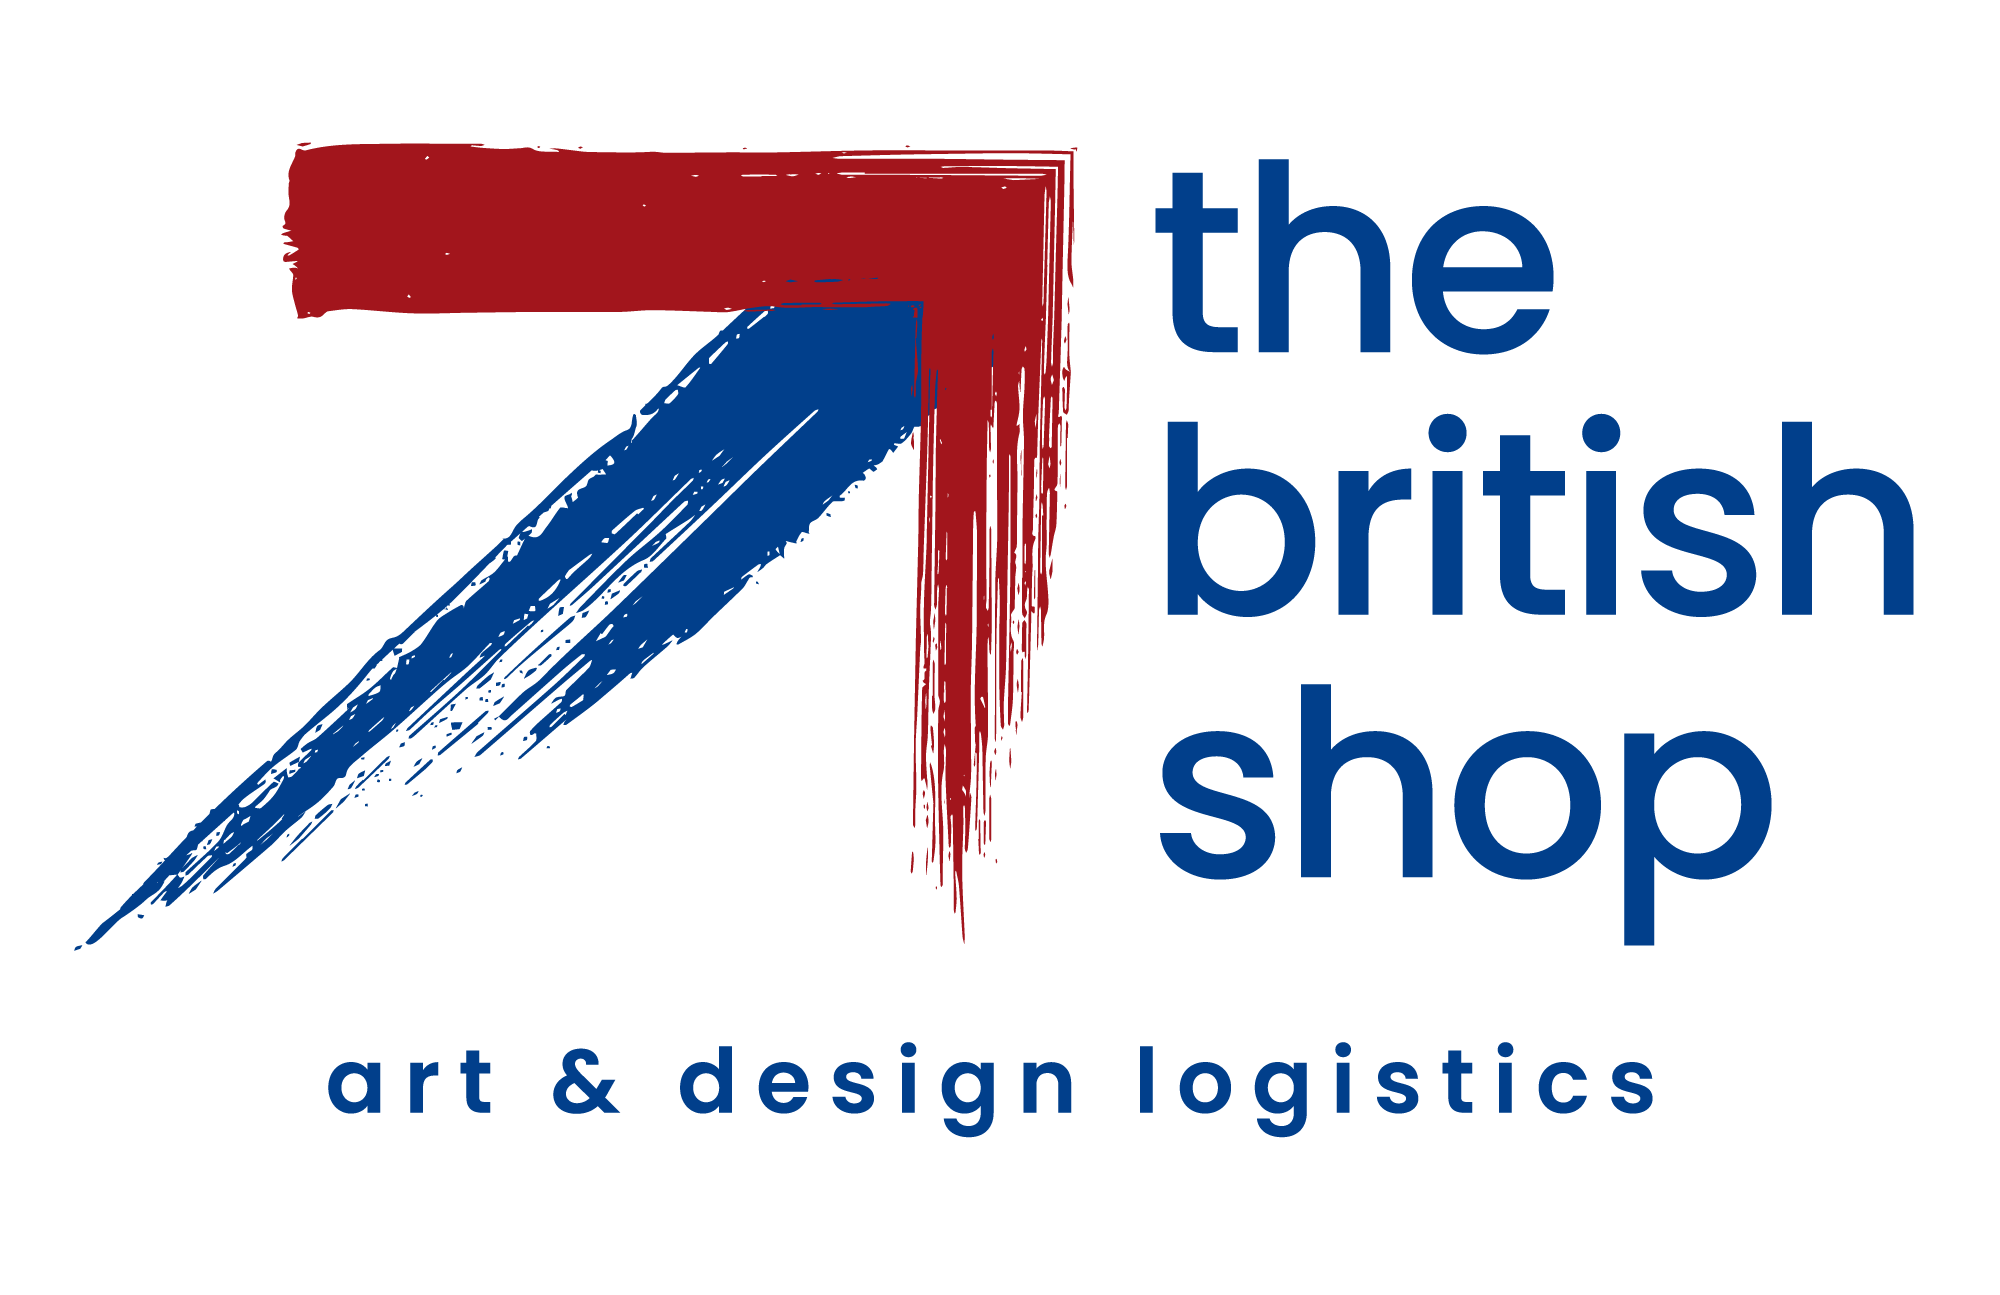 The British Shop